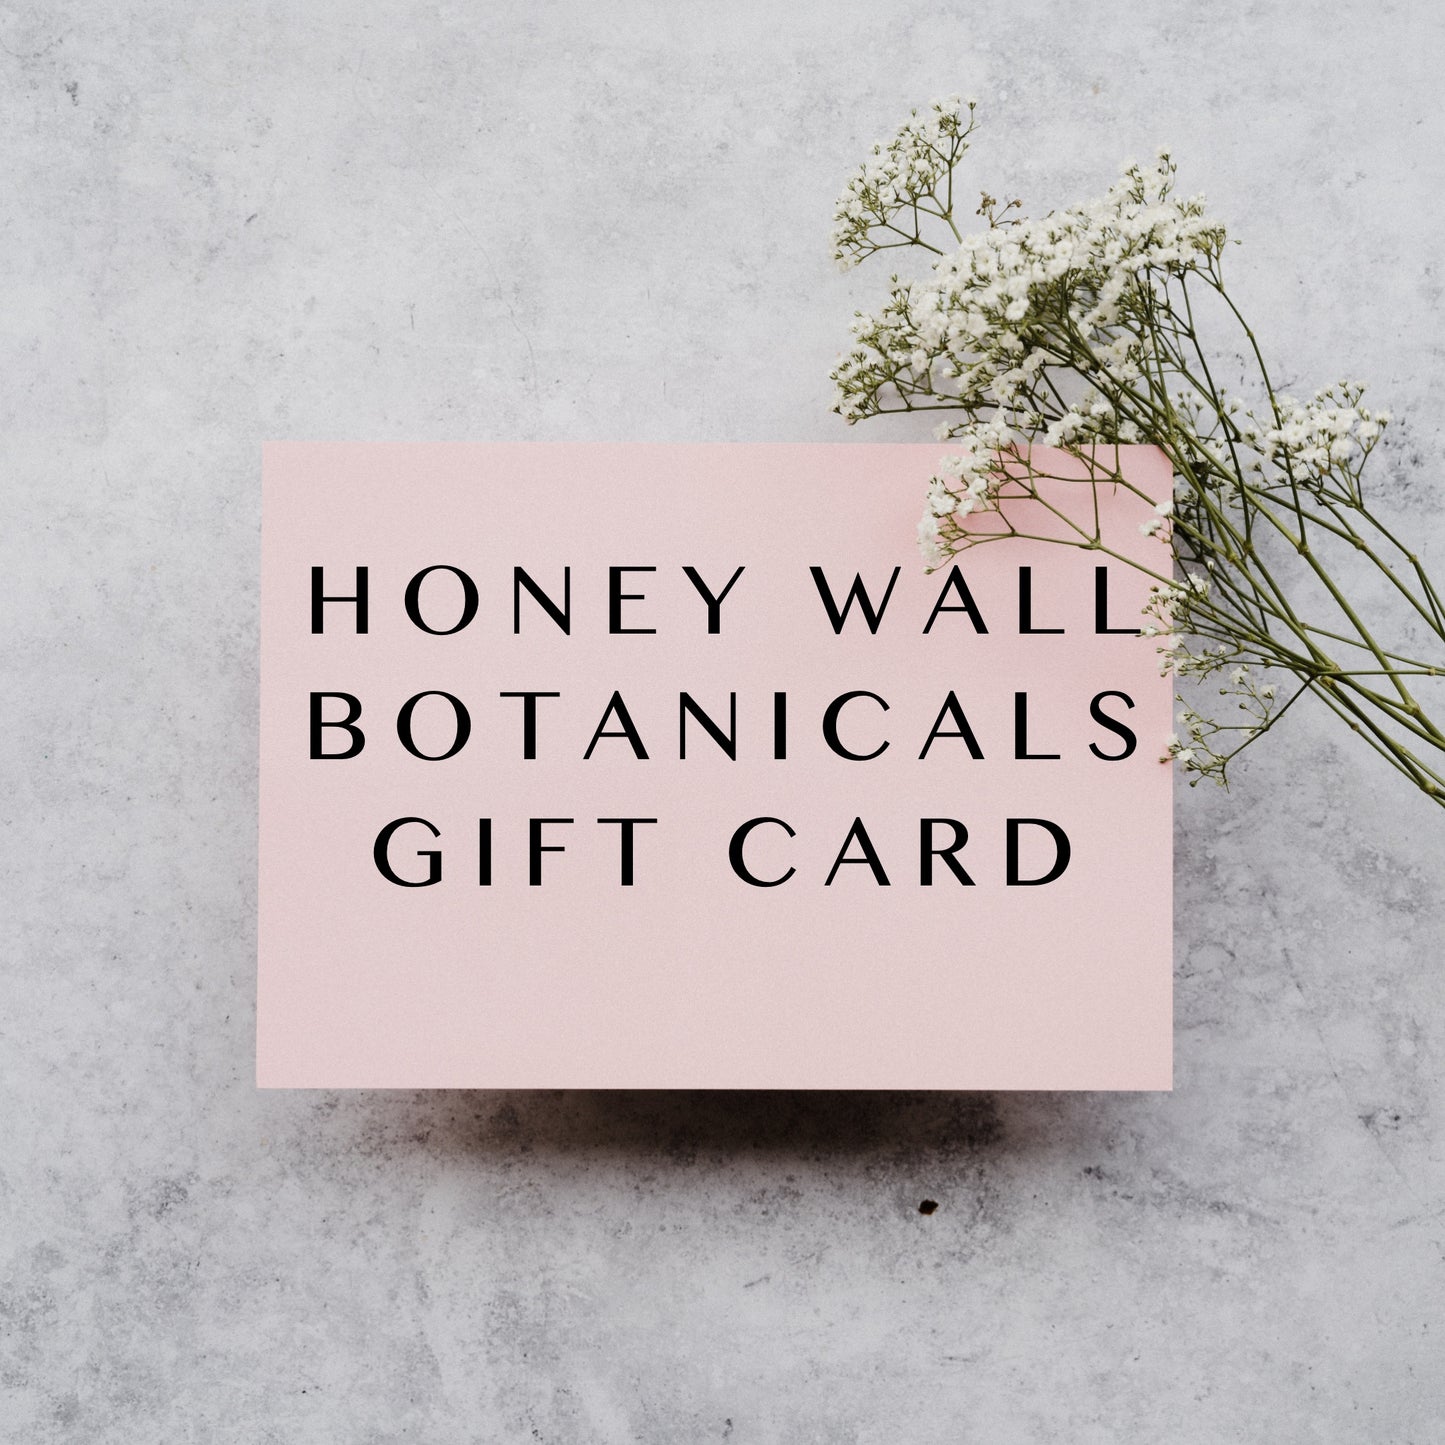 Honey Wall Botanicals Gift Card